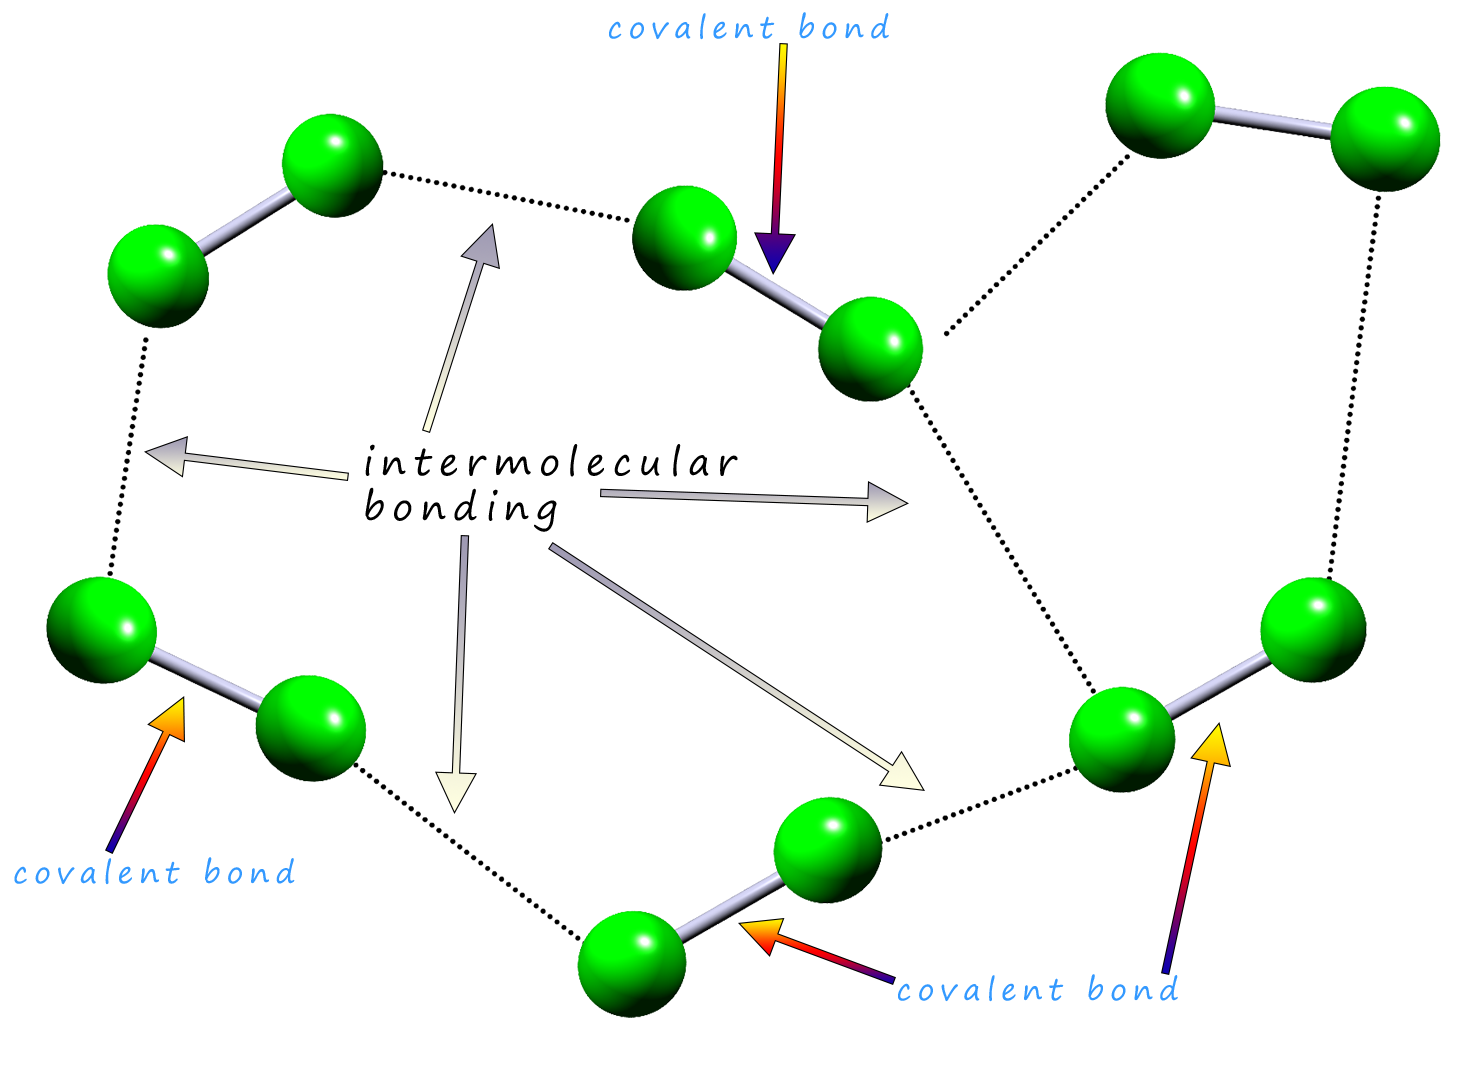 intermolecular bonding in chlorine gas